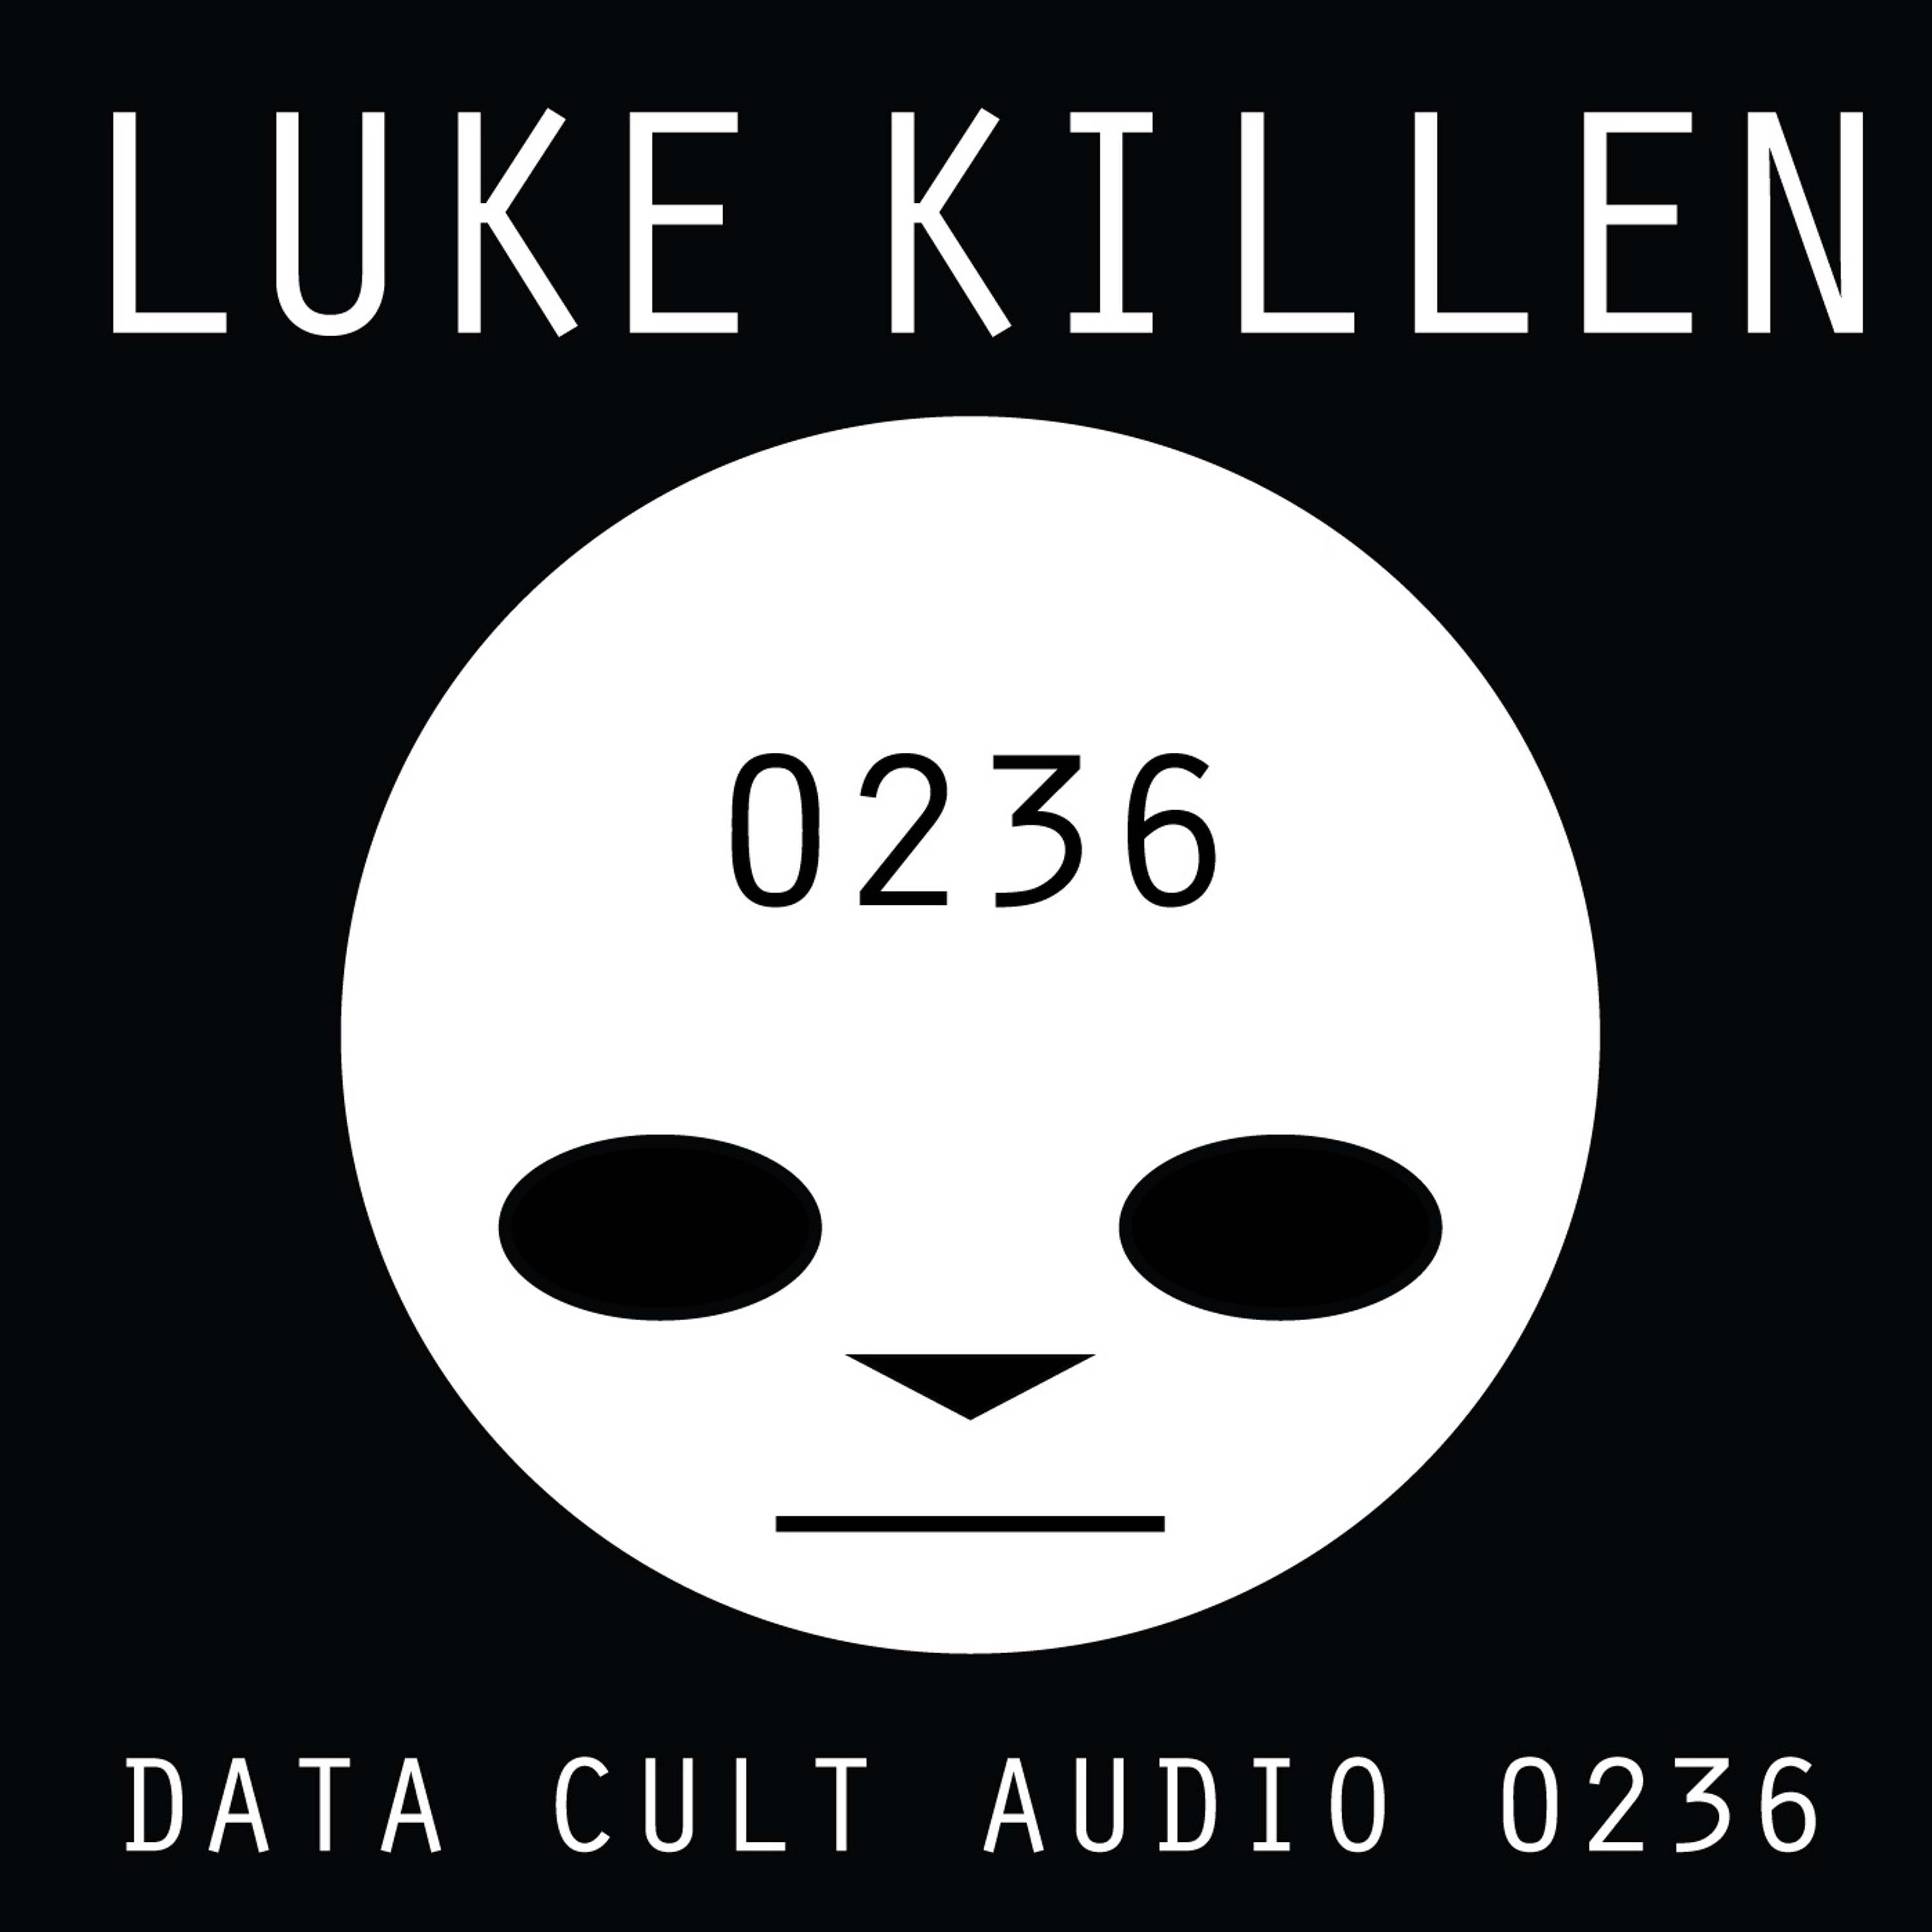 Data Cult Audio 0236 - Luke Killen